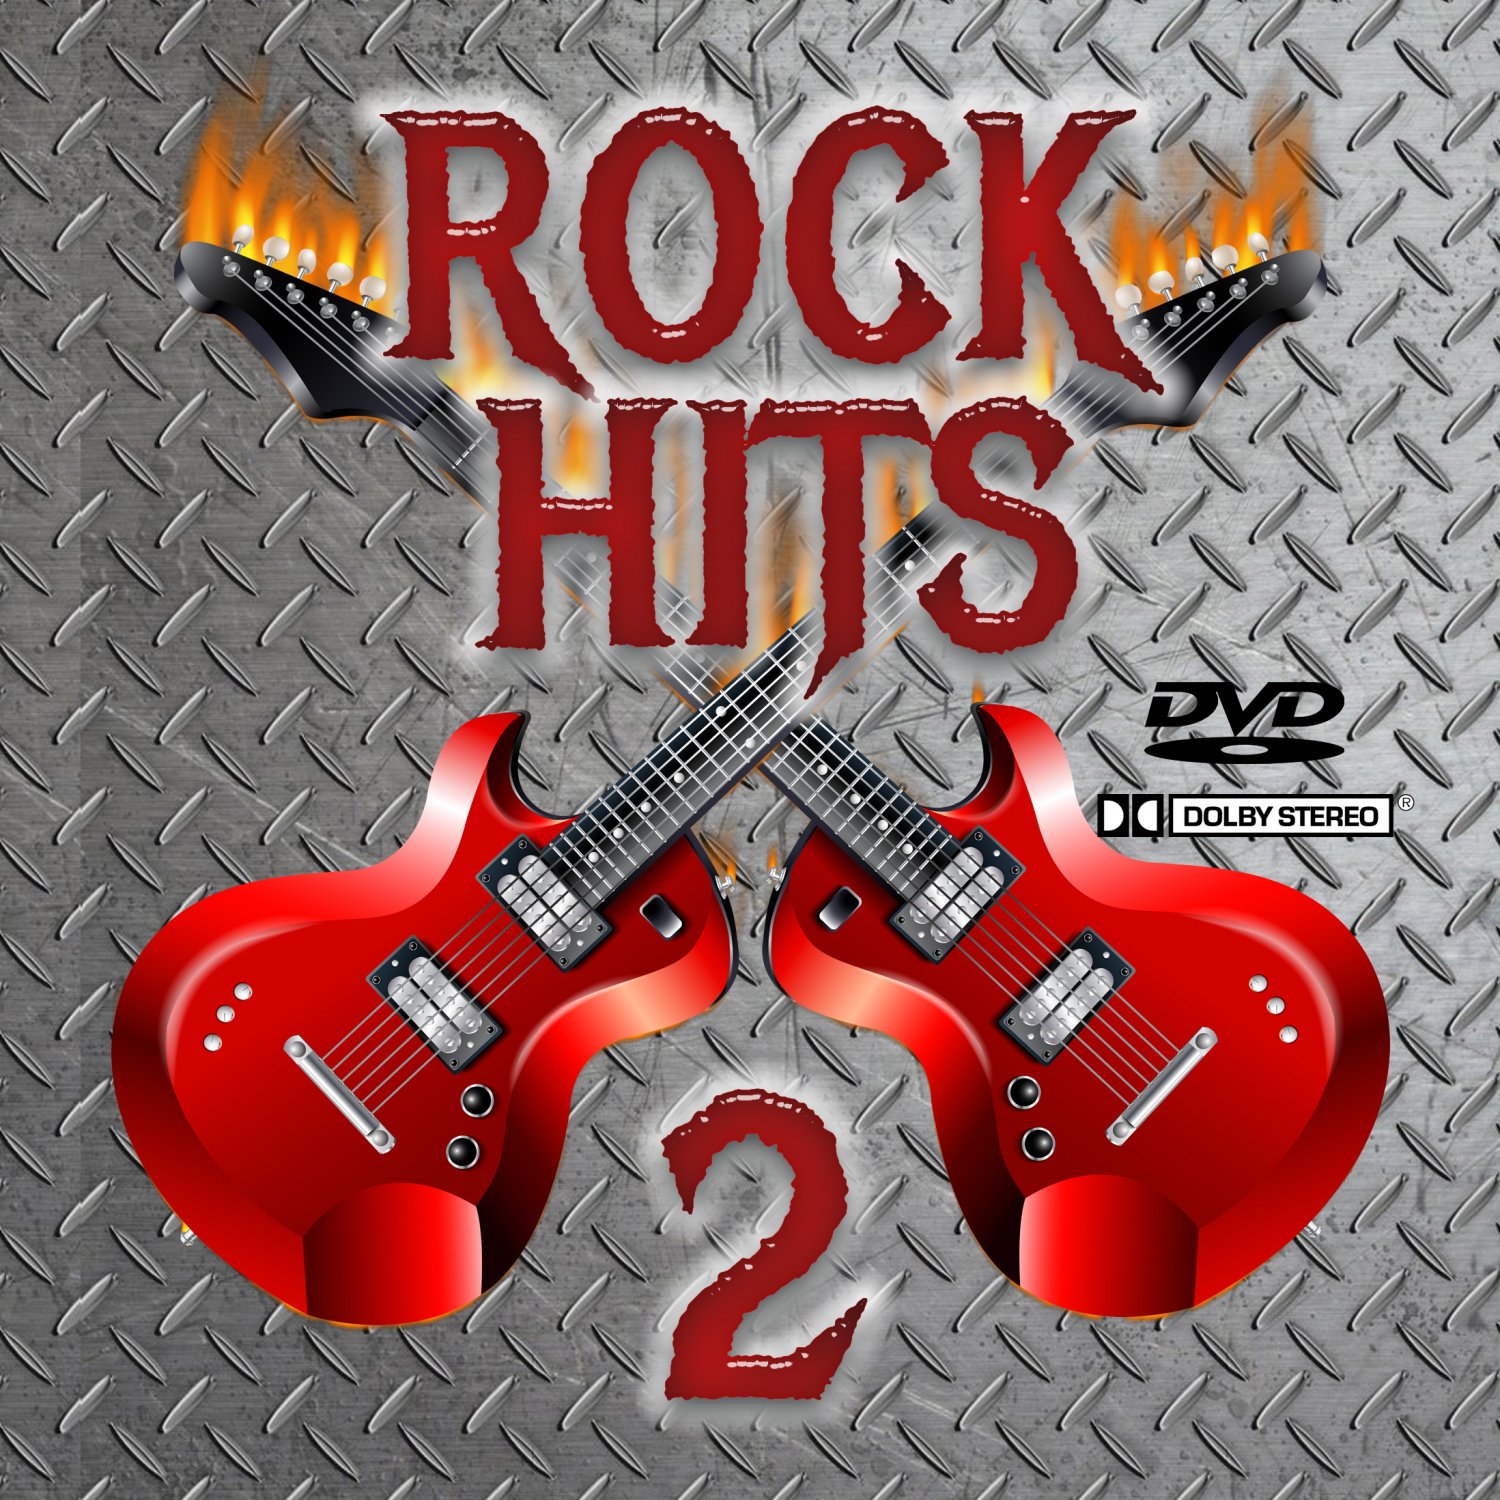 Classic Rock Music Videos Vol 2 (6 DVD's) 141 Music Videos